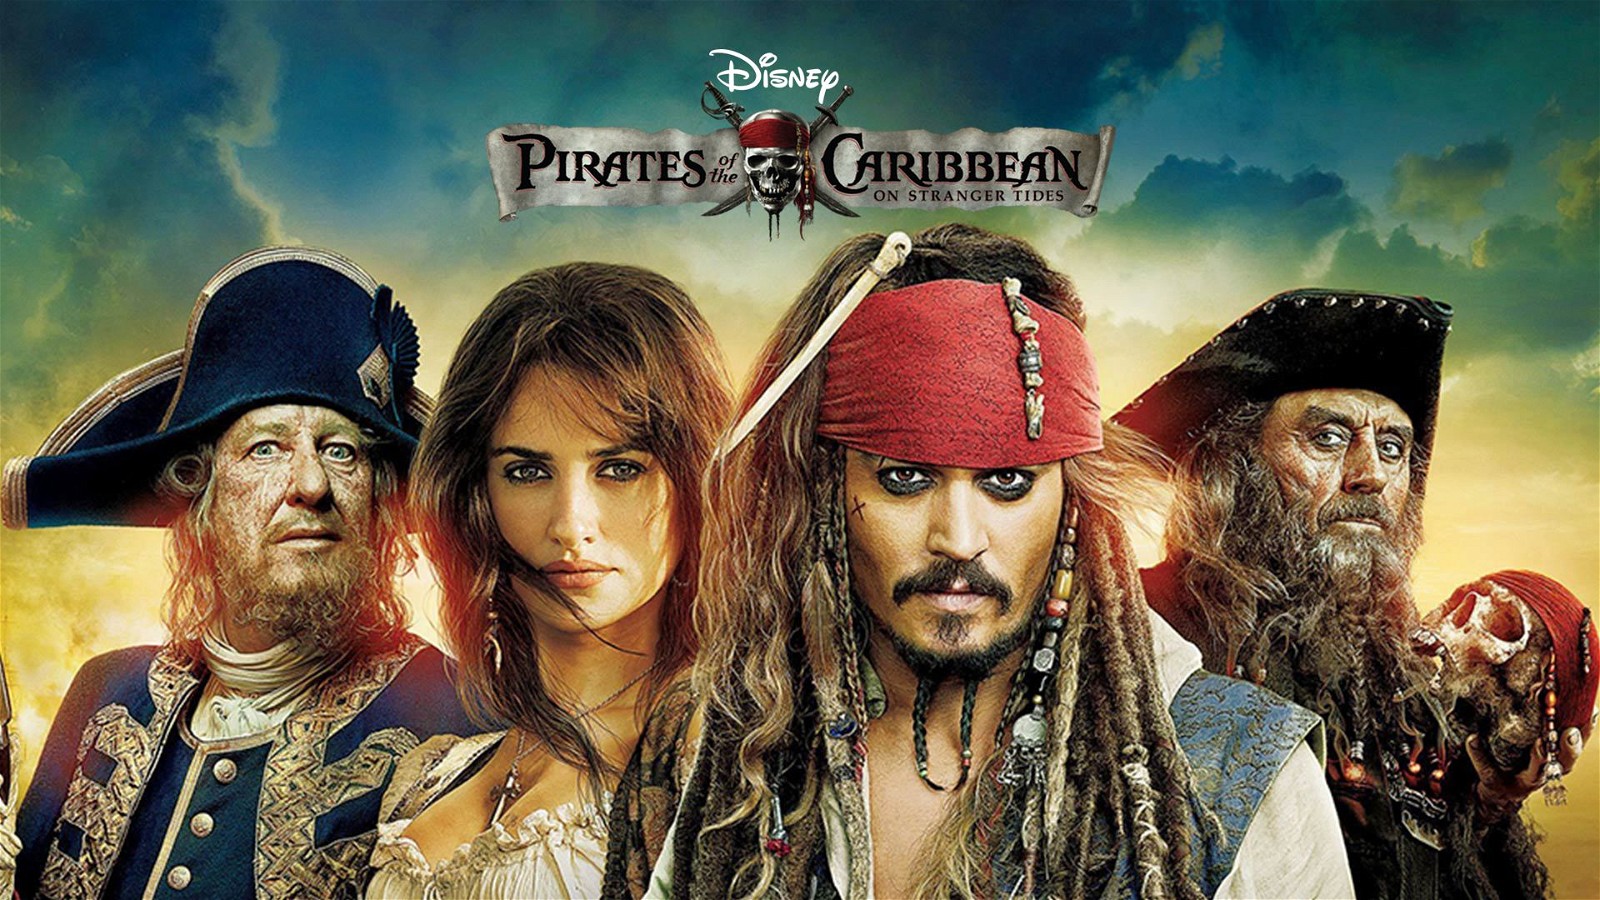 Disney's Pirates of the Caribbean